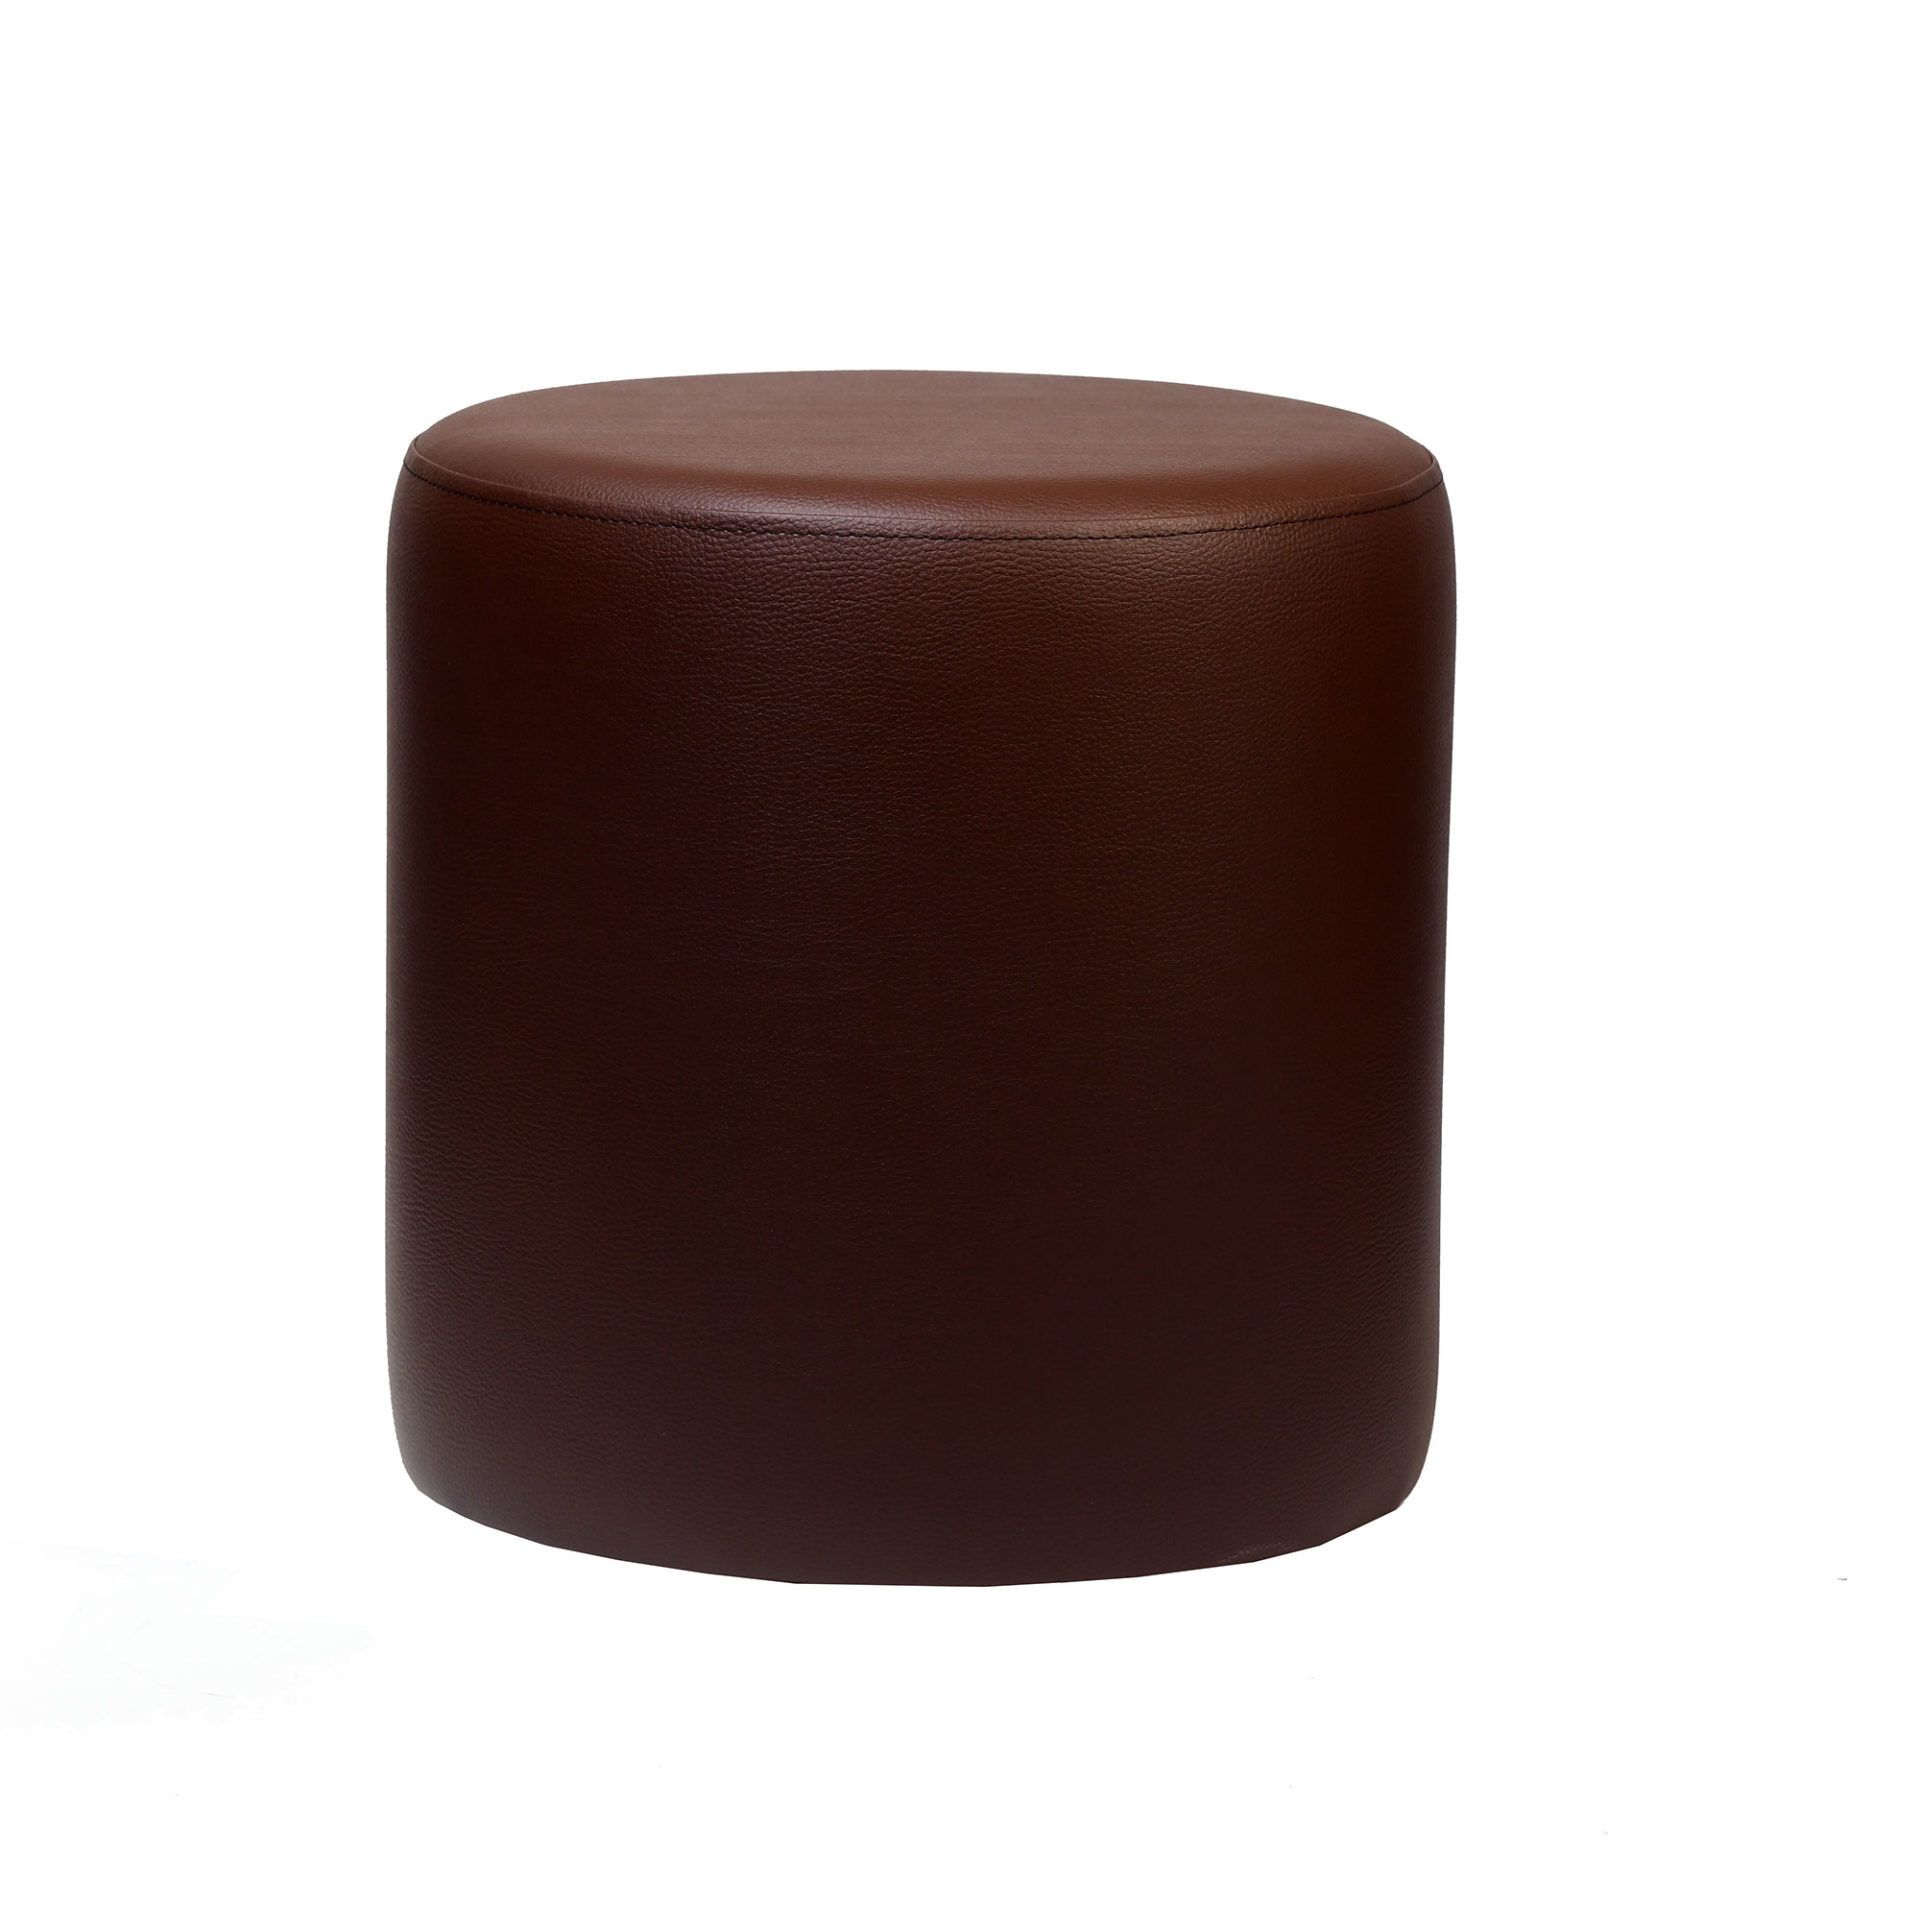 Ottoman Round - Chocolate